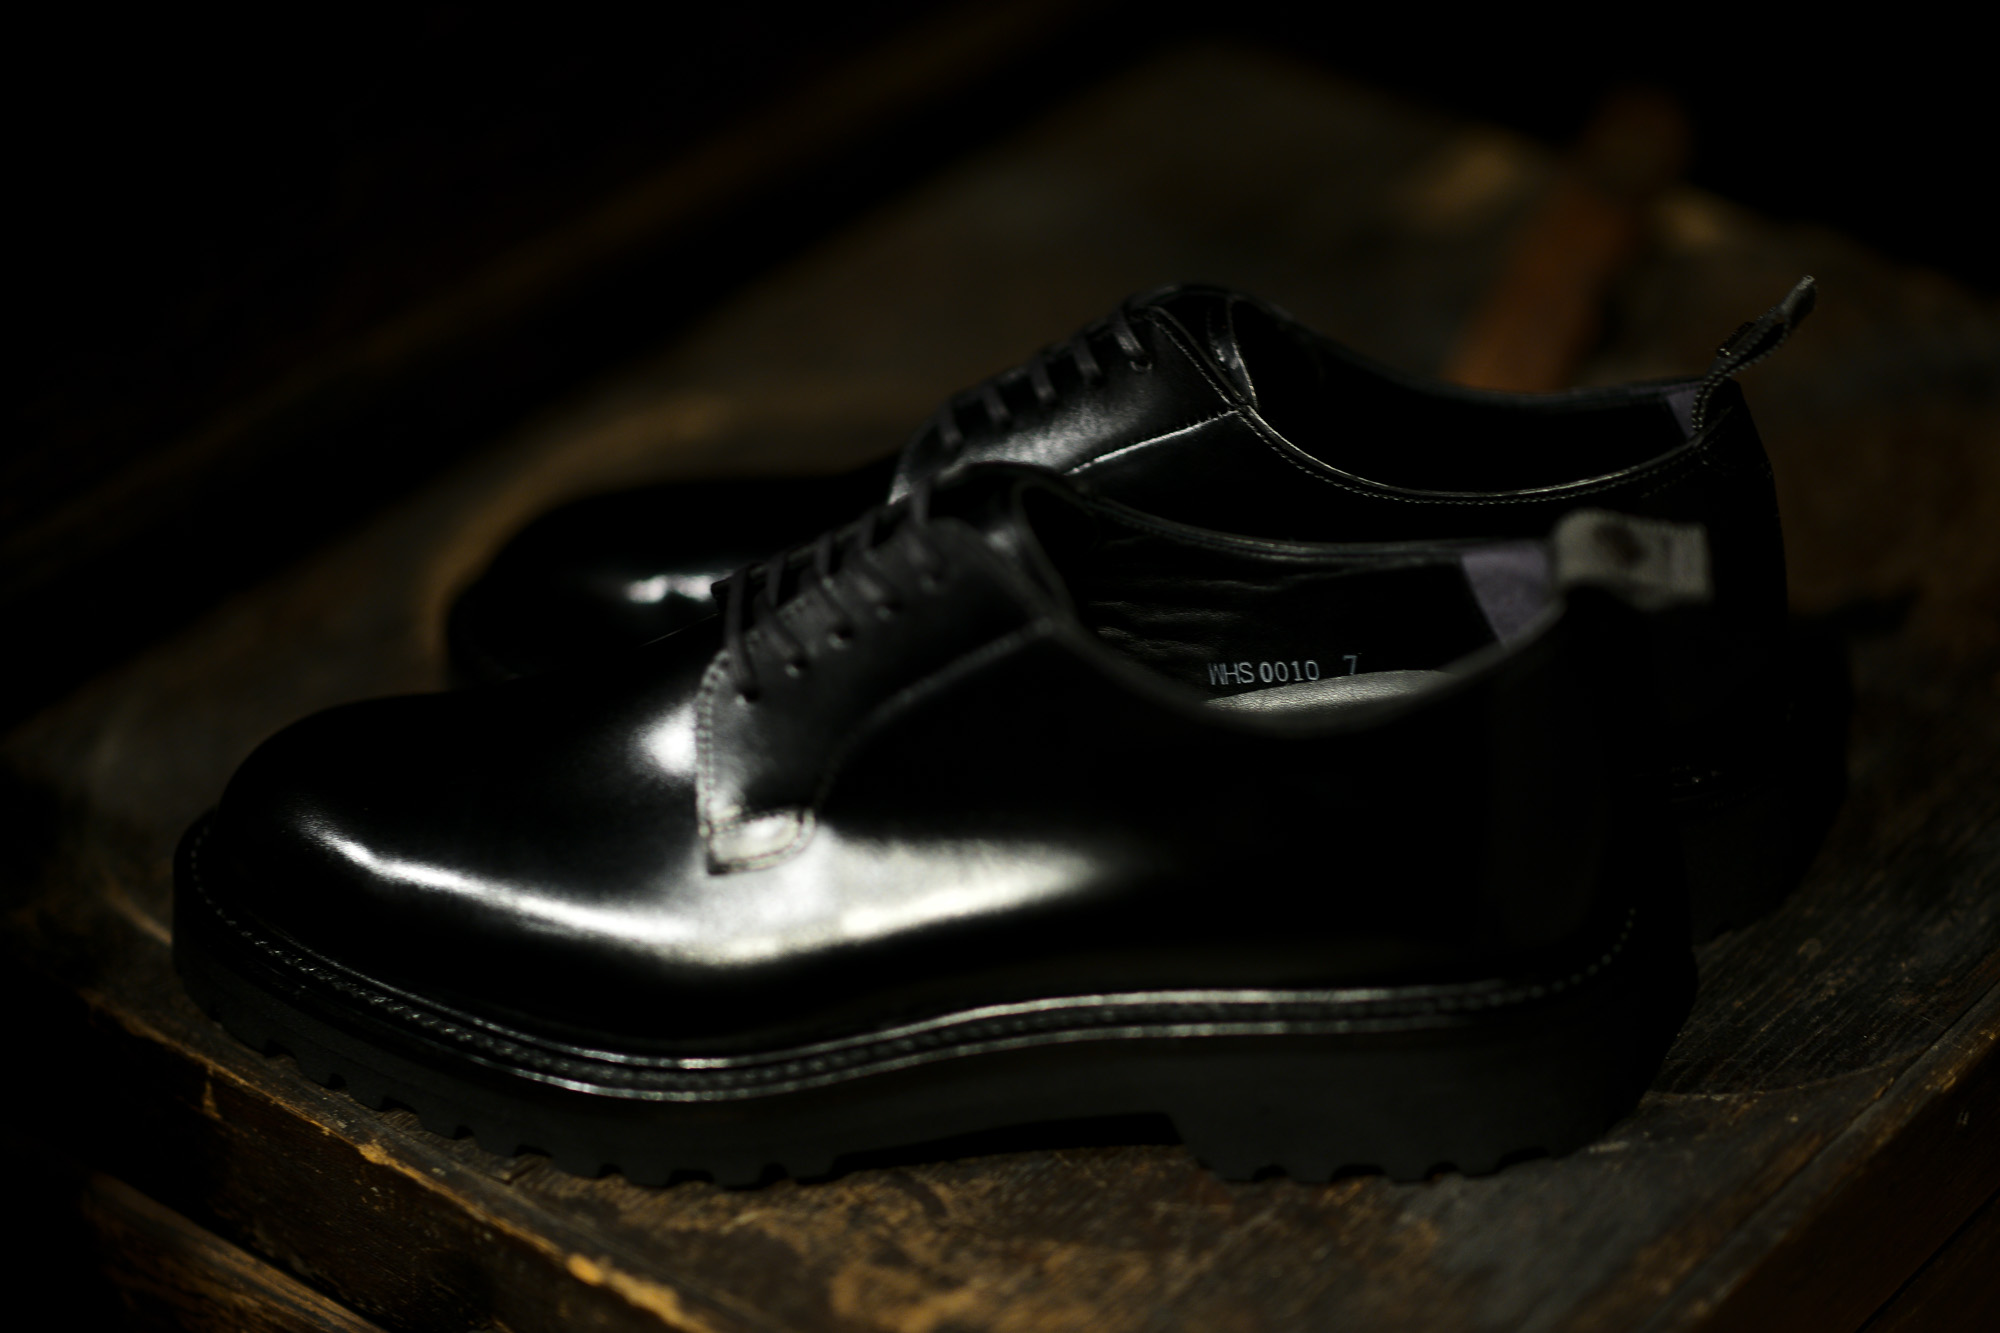 WH (ダブルエイチ) WHS-0010 Plane Toe Shoes (干場氏 スペシャル) Birdie Last (バーディラスト) ANNONAY Vocalou Calf Leather プレーントゥシューズ BLACK (ブラック) MADE IN JAPAN (日本製) 2020 愛知 名古屋 alto e diritto altoediritto アルトエデリット